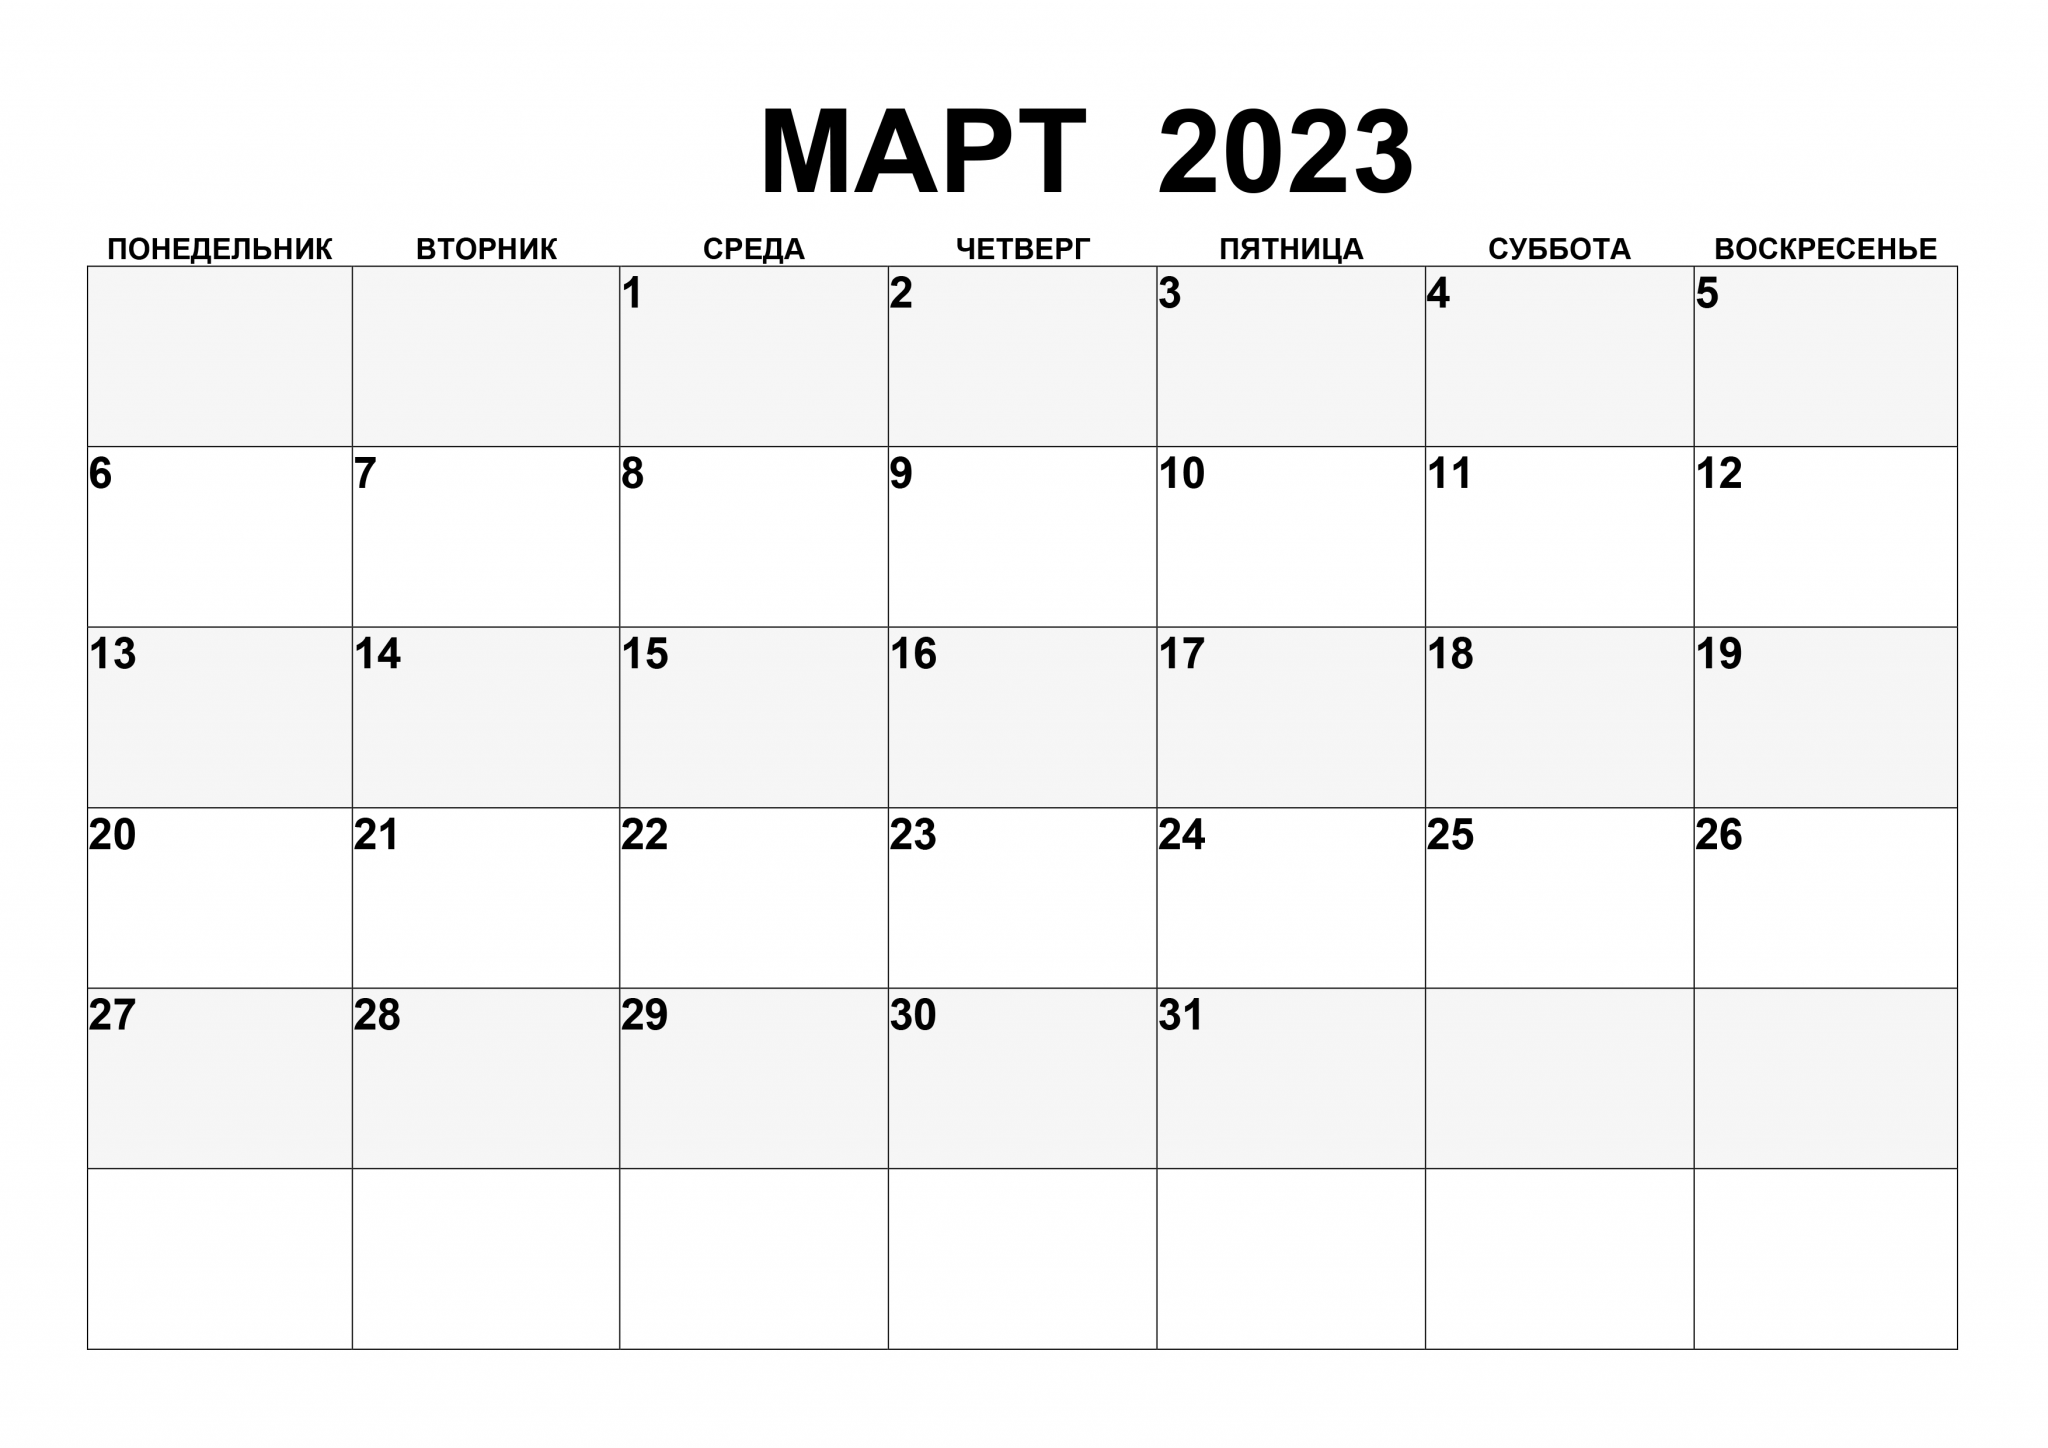 Календарь март 2022